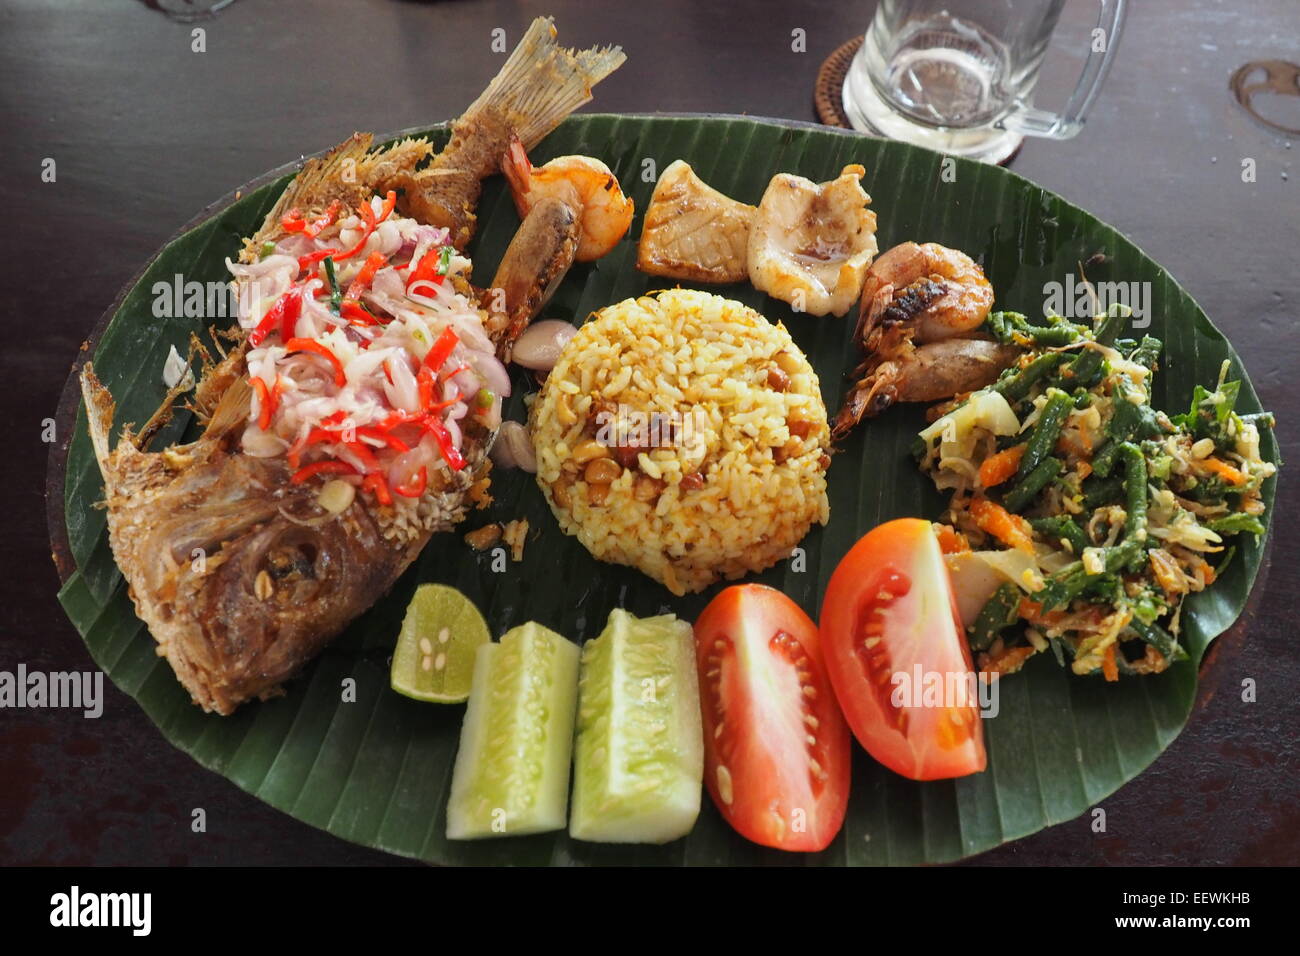 Cibo Balinese Immagini e Fotos Stock - Alamy